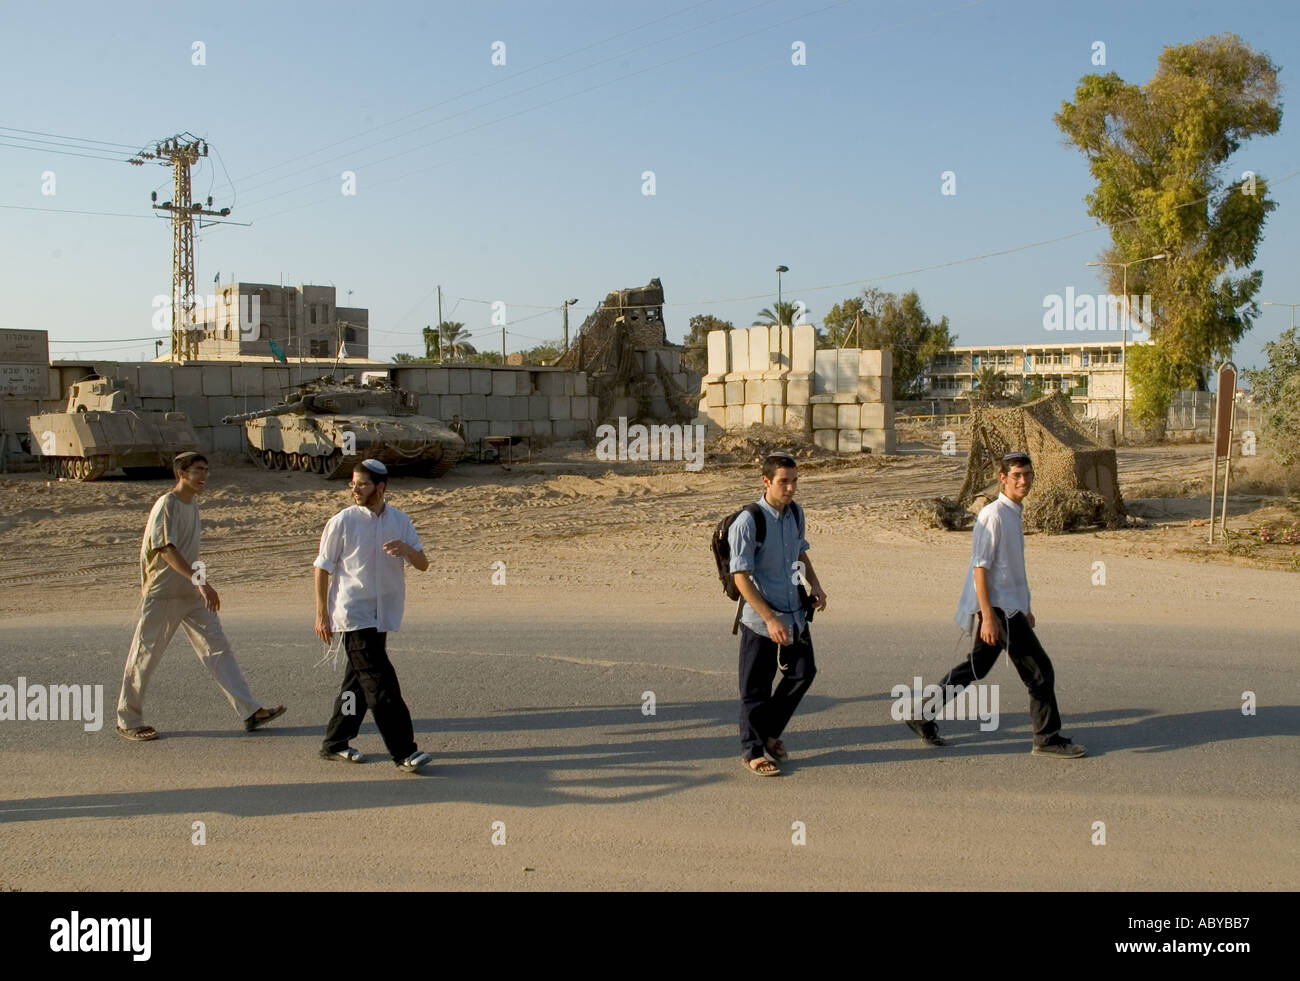 Isarel Gaza strip Gush Katif settlements Kfar Darom youngsters walking passed army vehicles Stock Photo